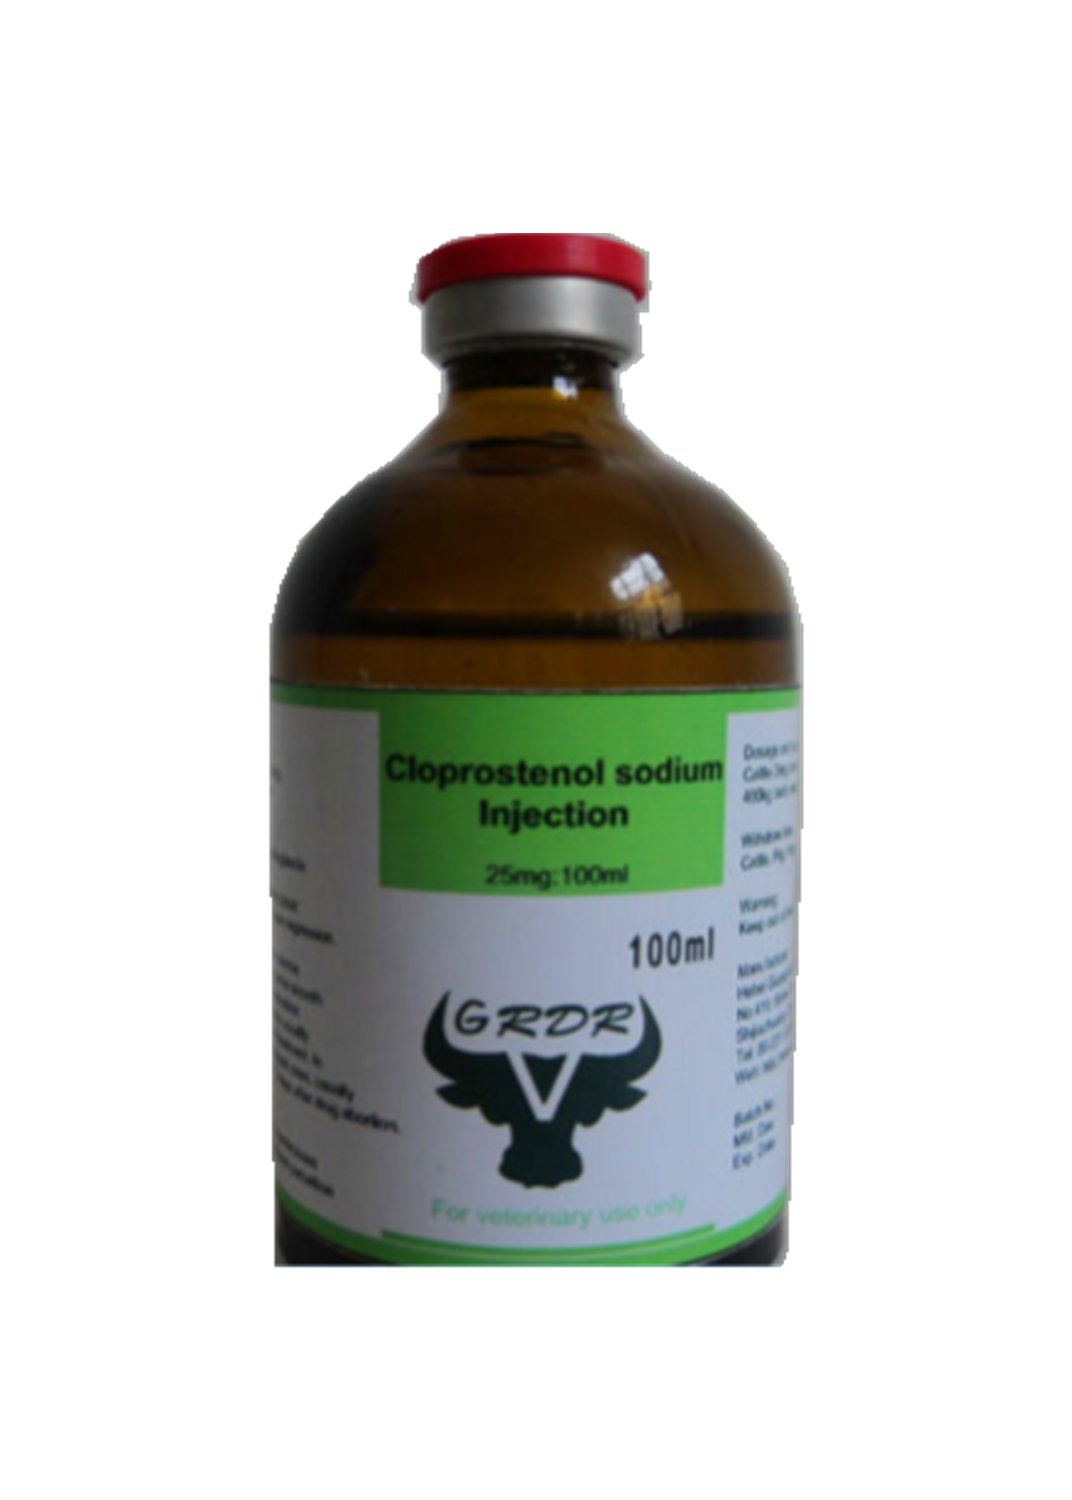 Cloprostenol Sodium Injection 